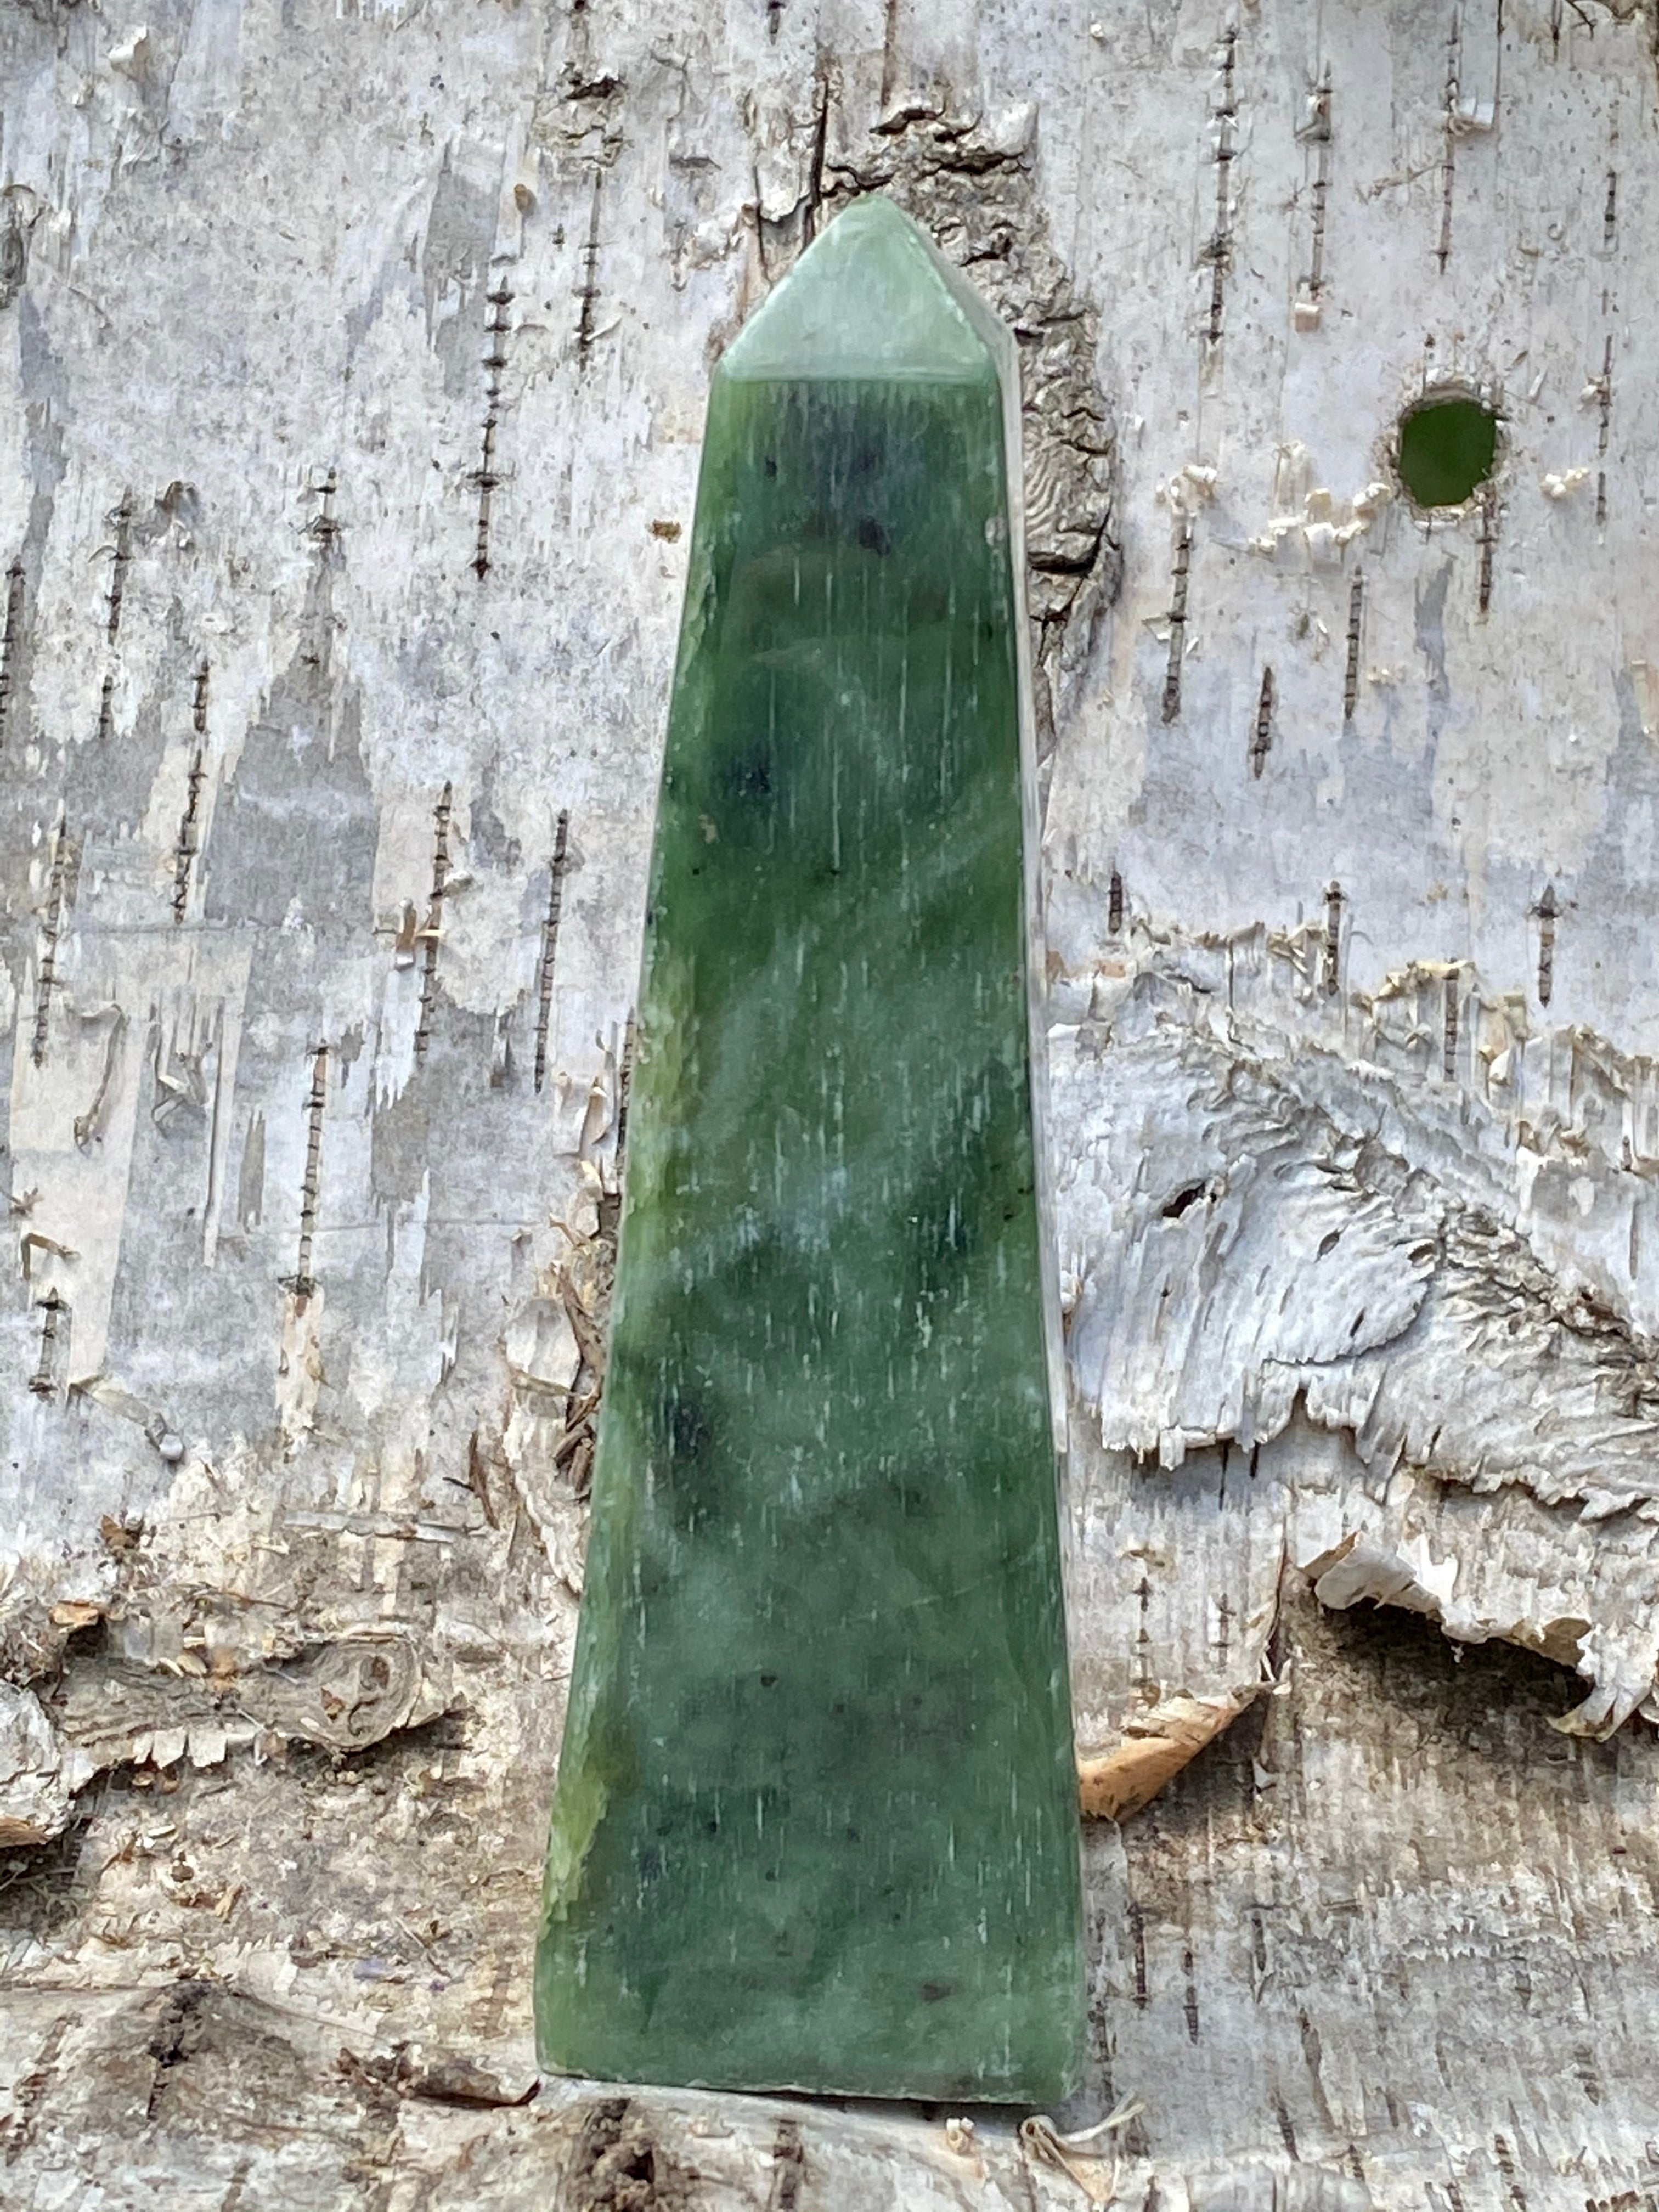 Nephrite Jade Tower